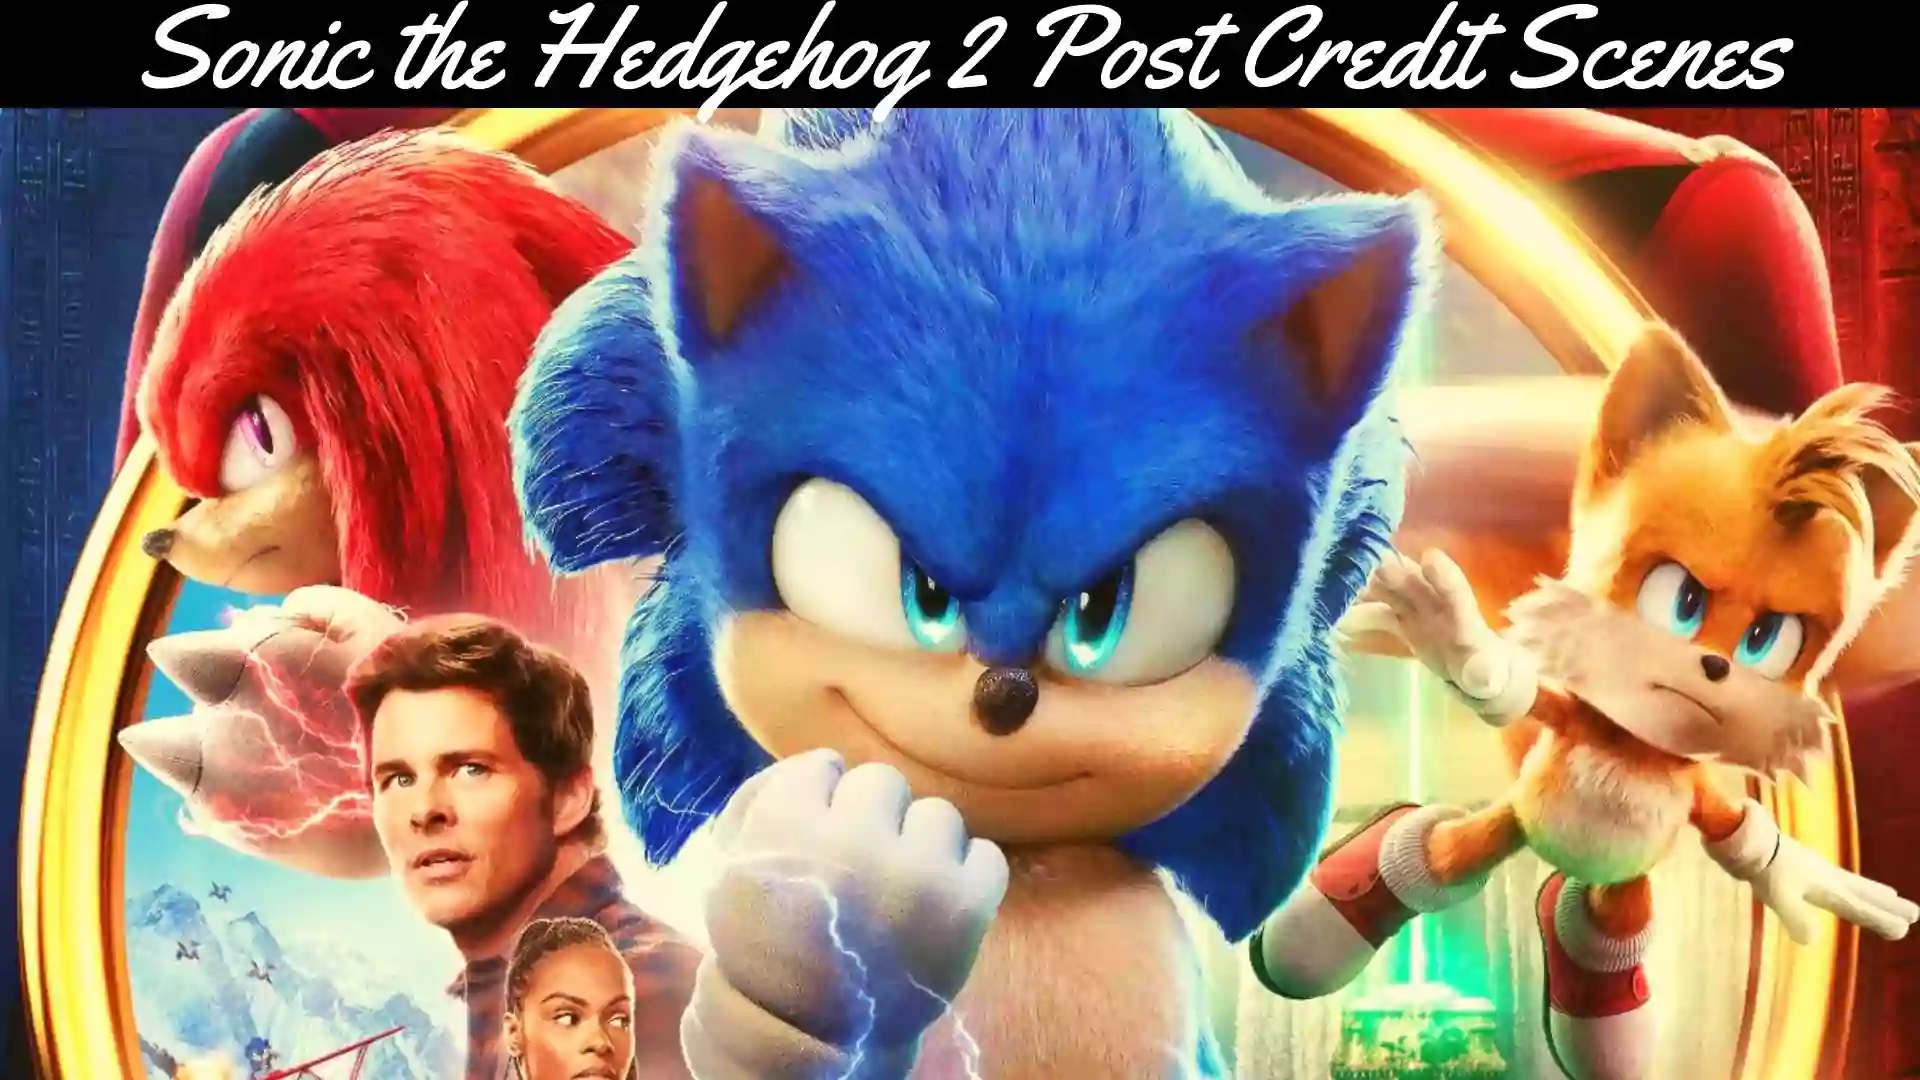 Sonic the Hedgehog 2 Post Credit Scenes